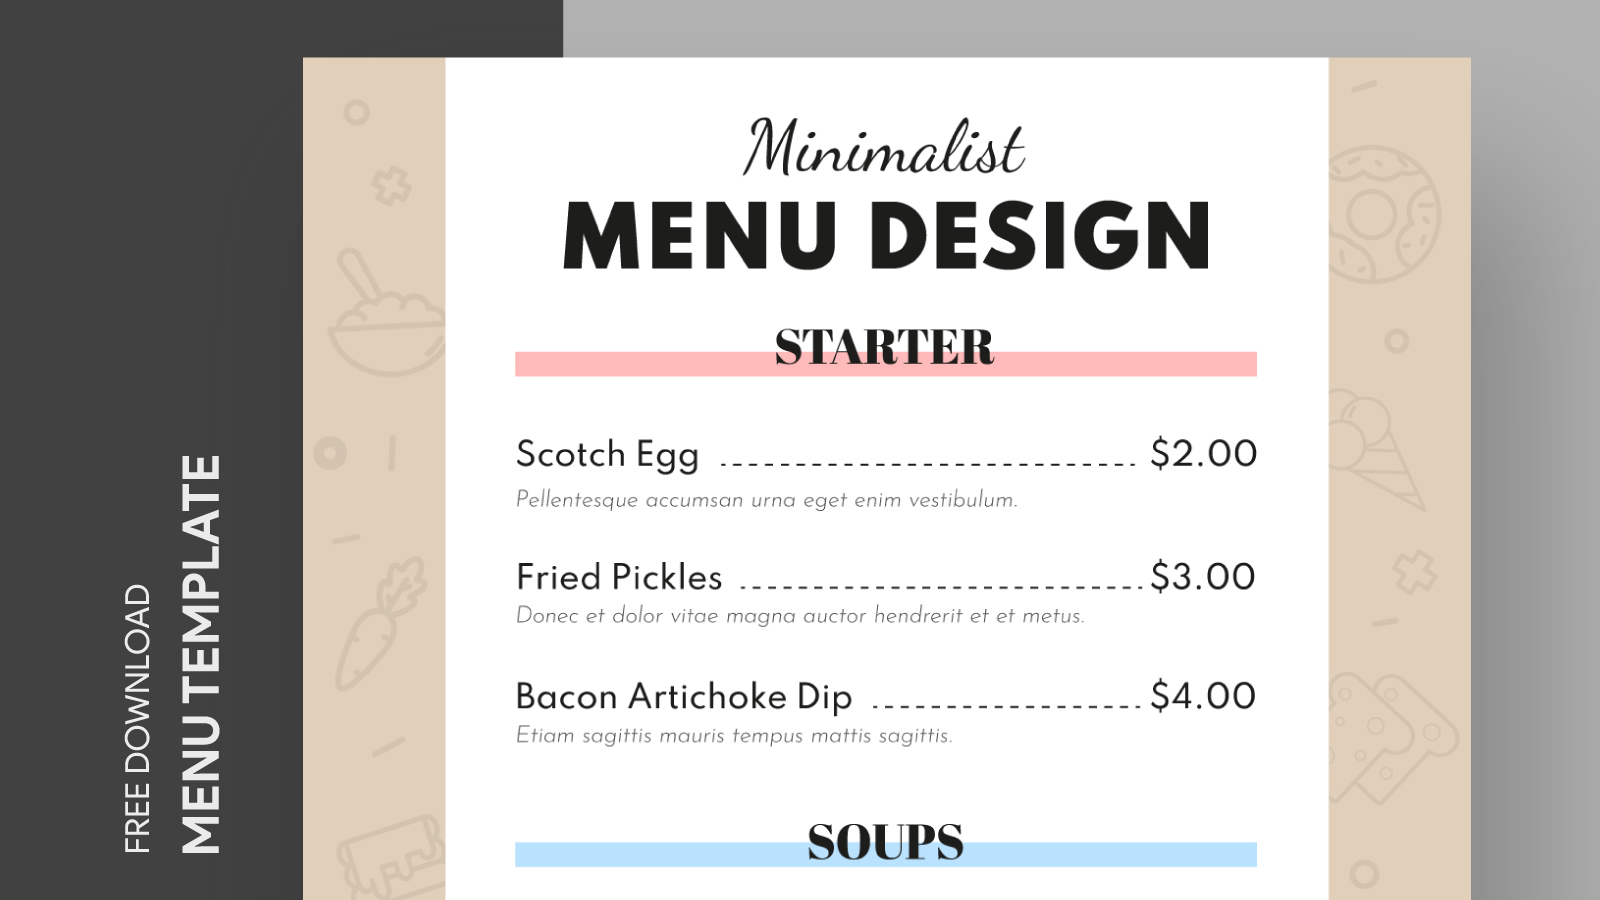 blank cafe menu template